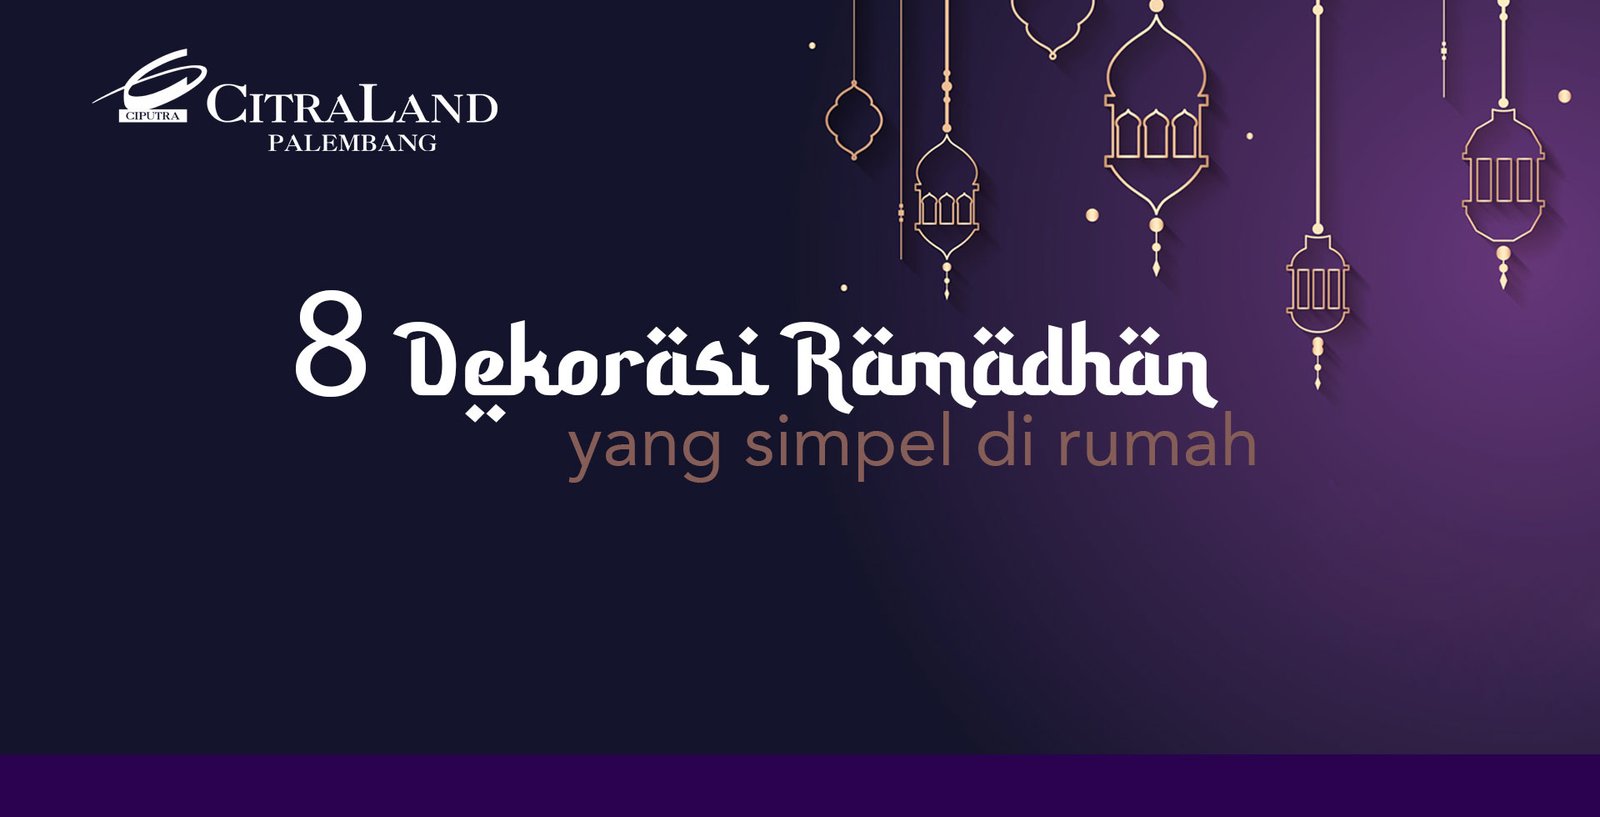 Dekorasi Ramadhan